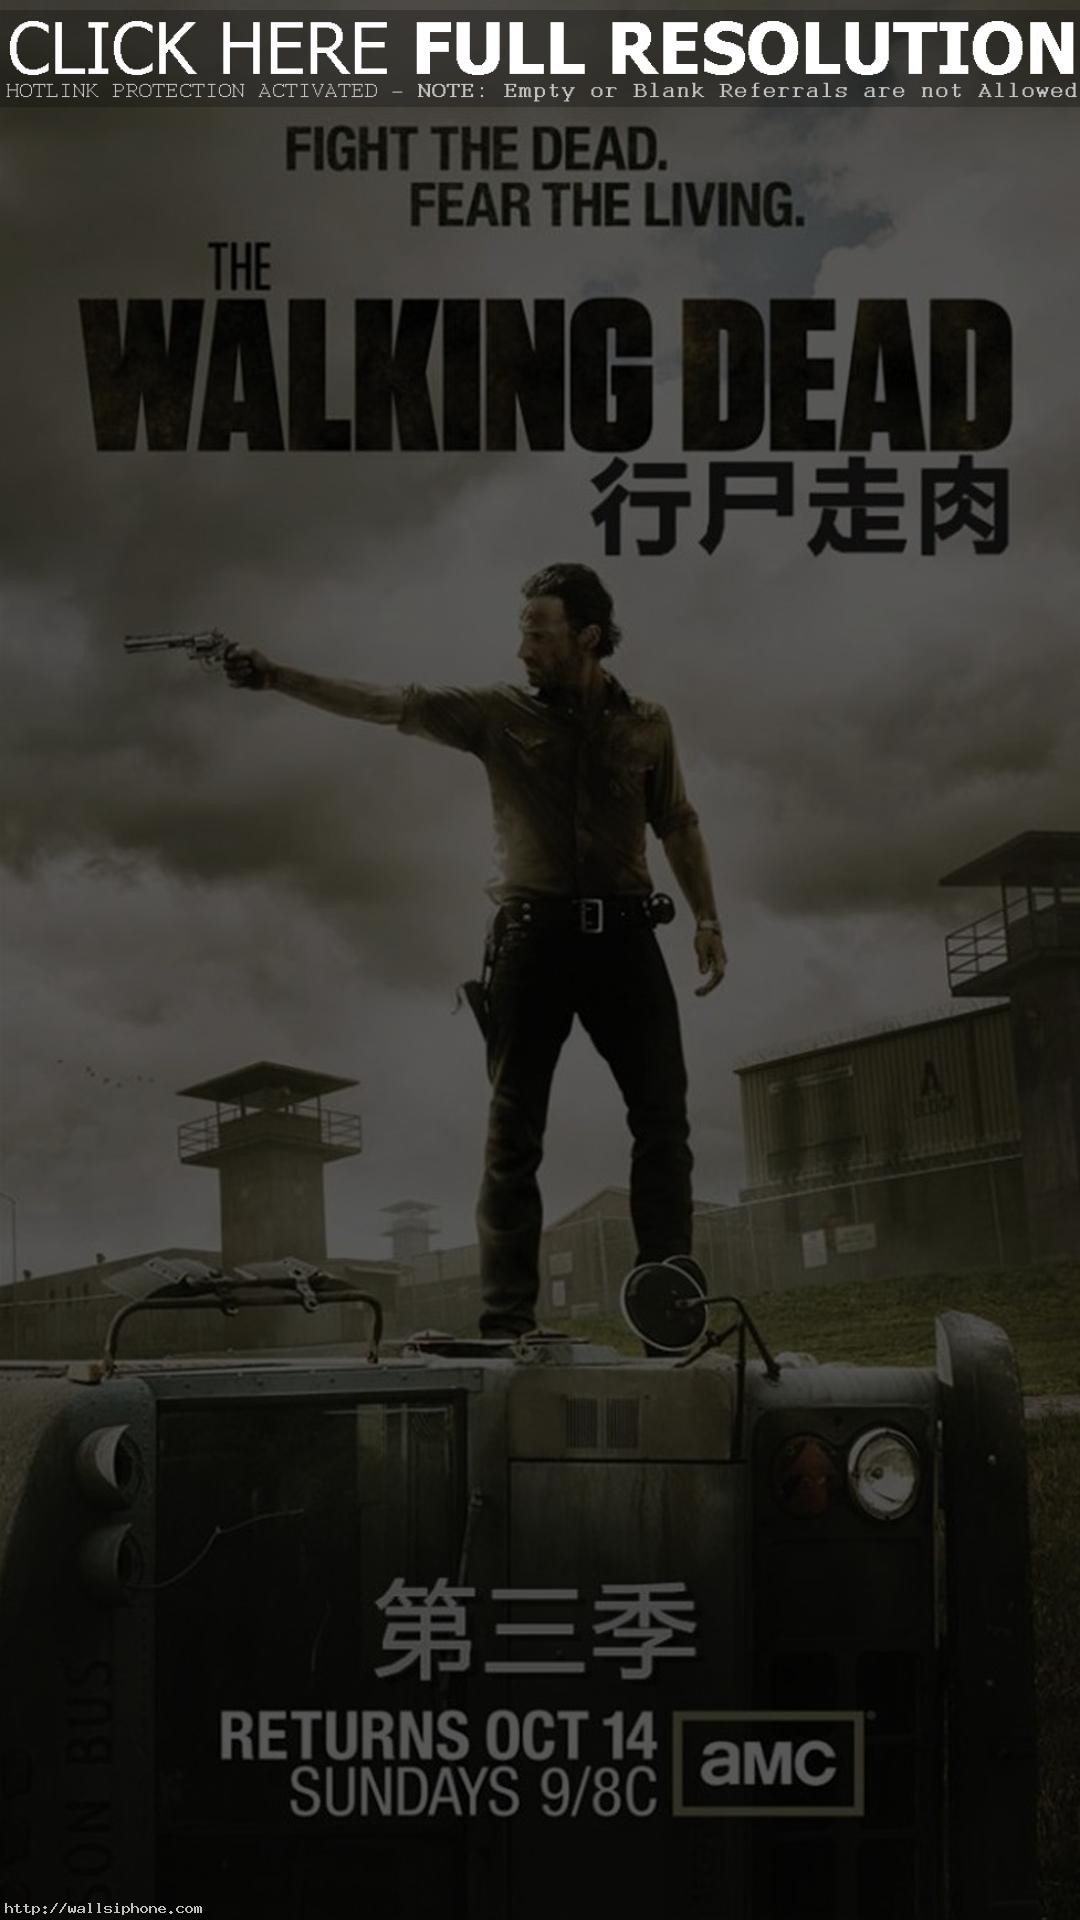 1080x1920 Walking Dead iPhone wallpaper. Download this wallpaper: iPhone 7